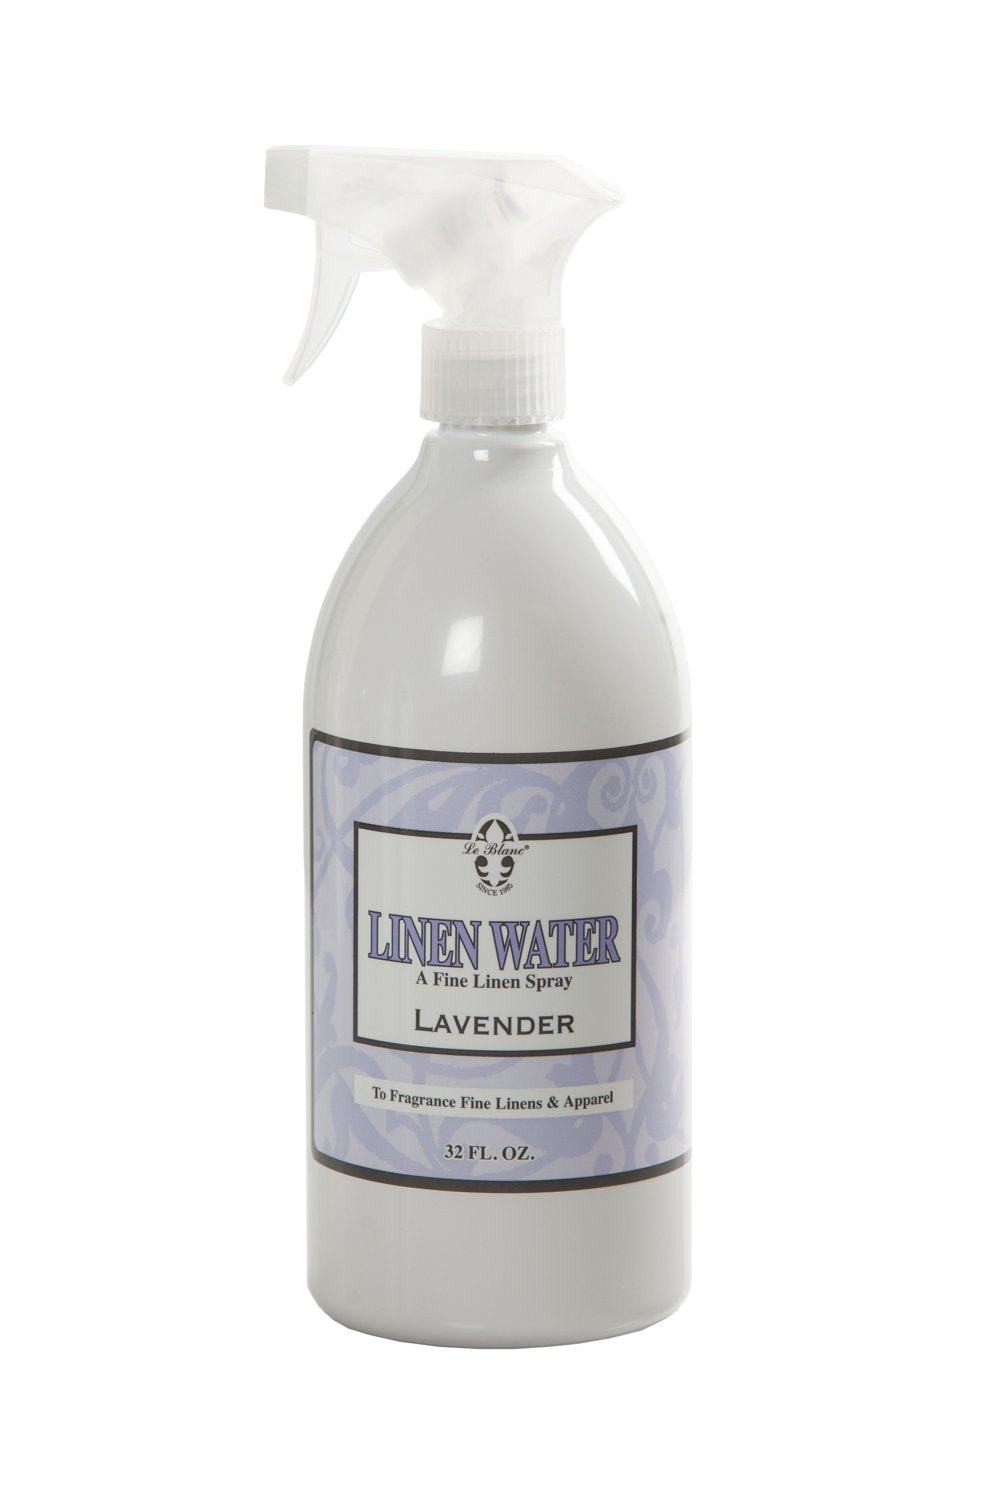 Lady Lavender Linen Water 32oz